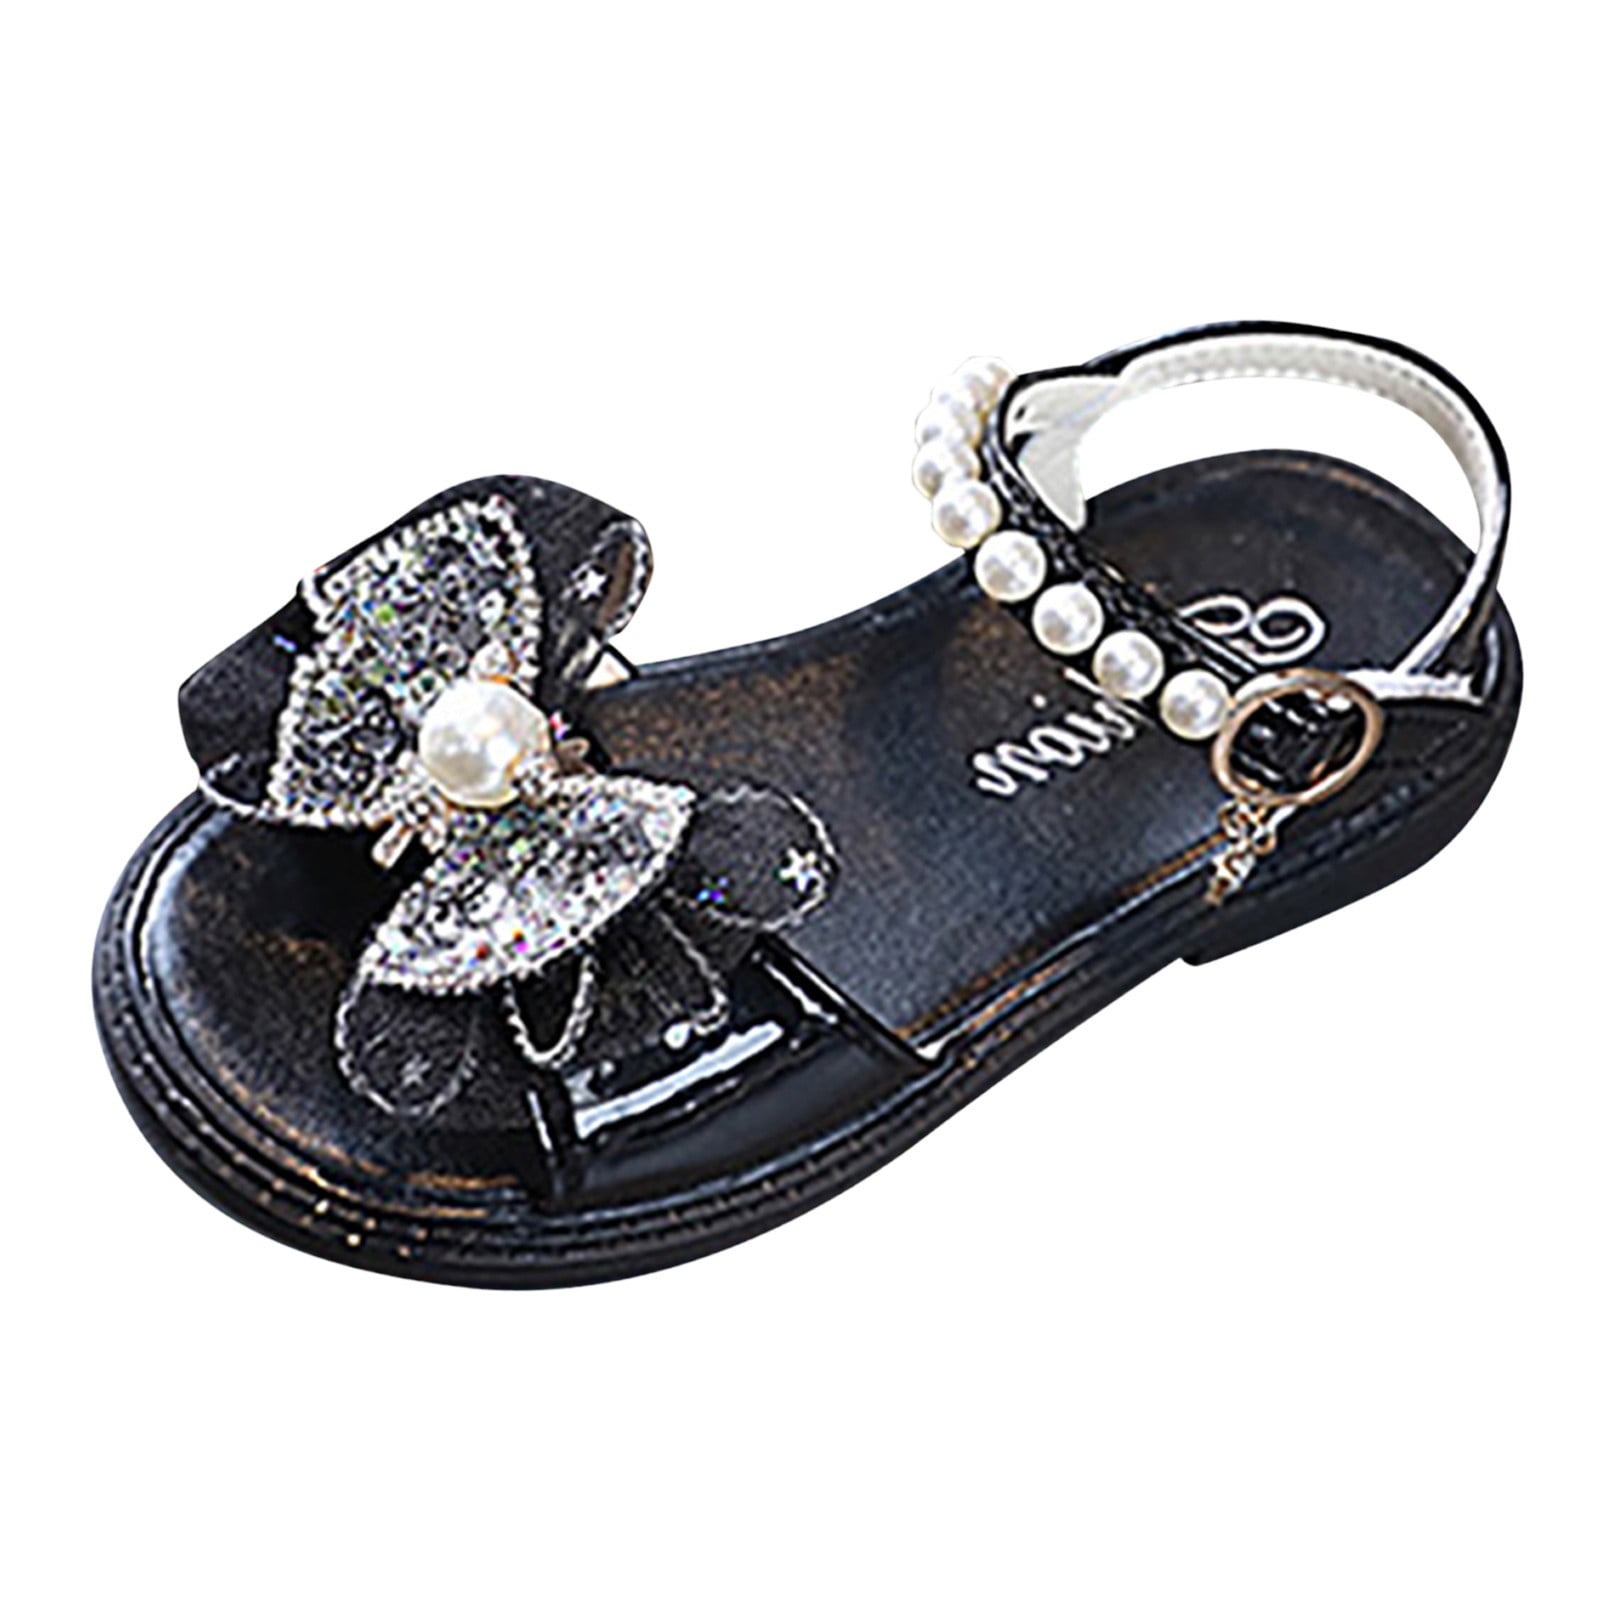 Pimfylm White Sandals Girls Baby Girls Summer Sandals with Flower Soft ...